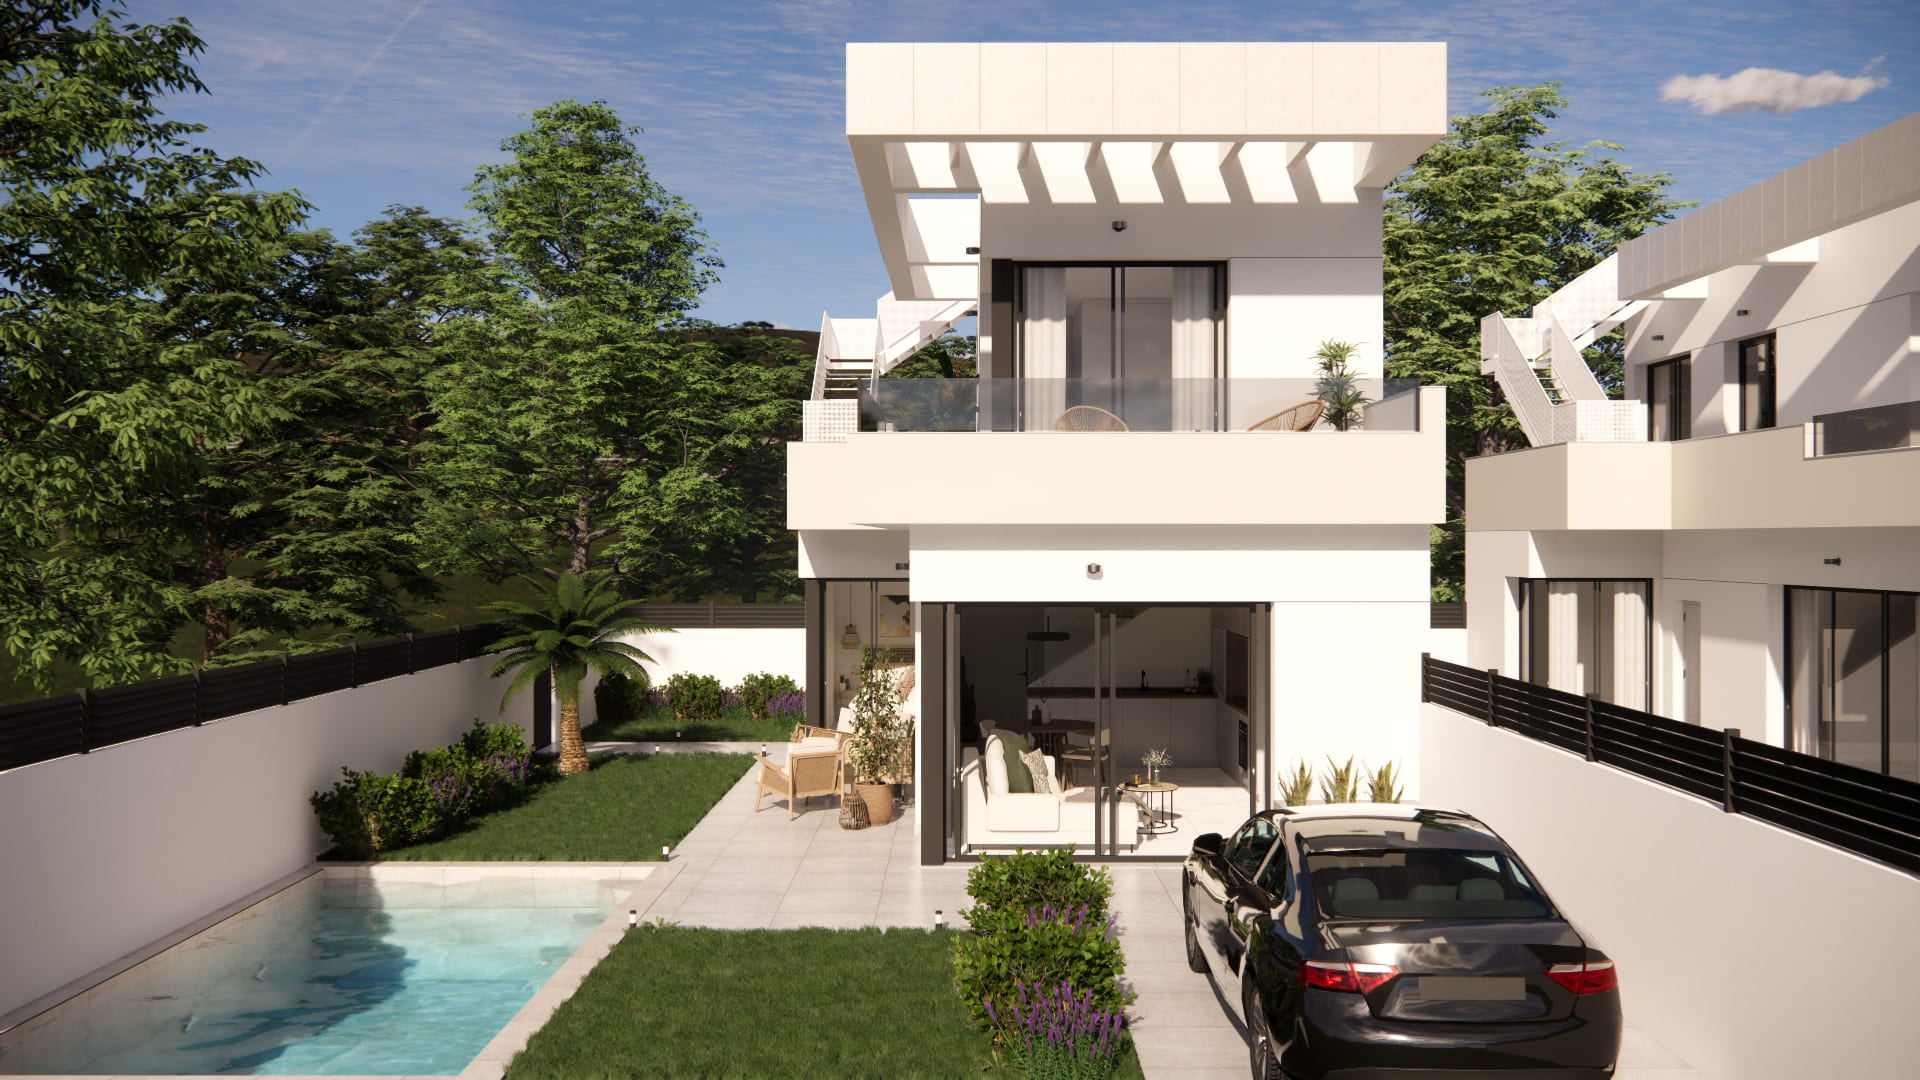 Small-scale new construction project with detached villas for sale in La Herrada, Los Montesinos.